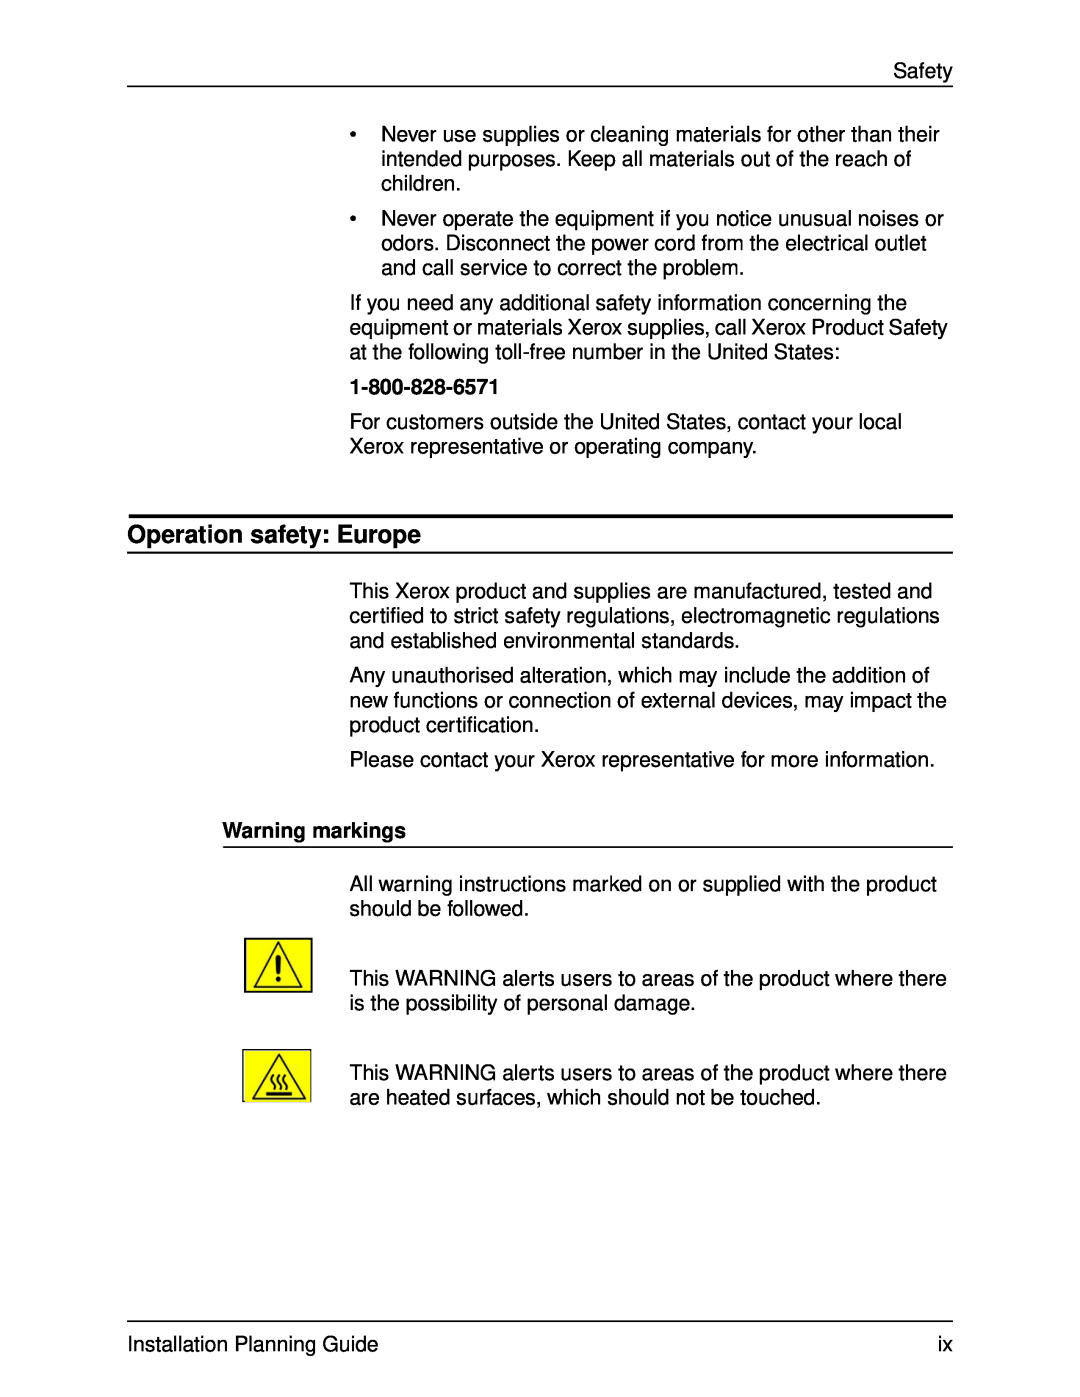 Xerox 155, 100, 135, 115 manual Operation safety Europe, Warning markings 